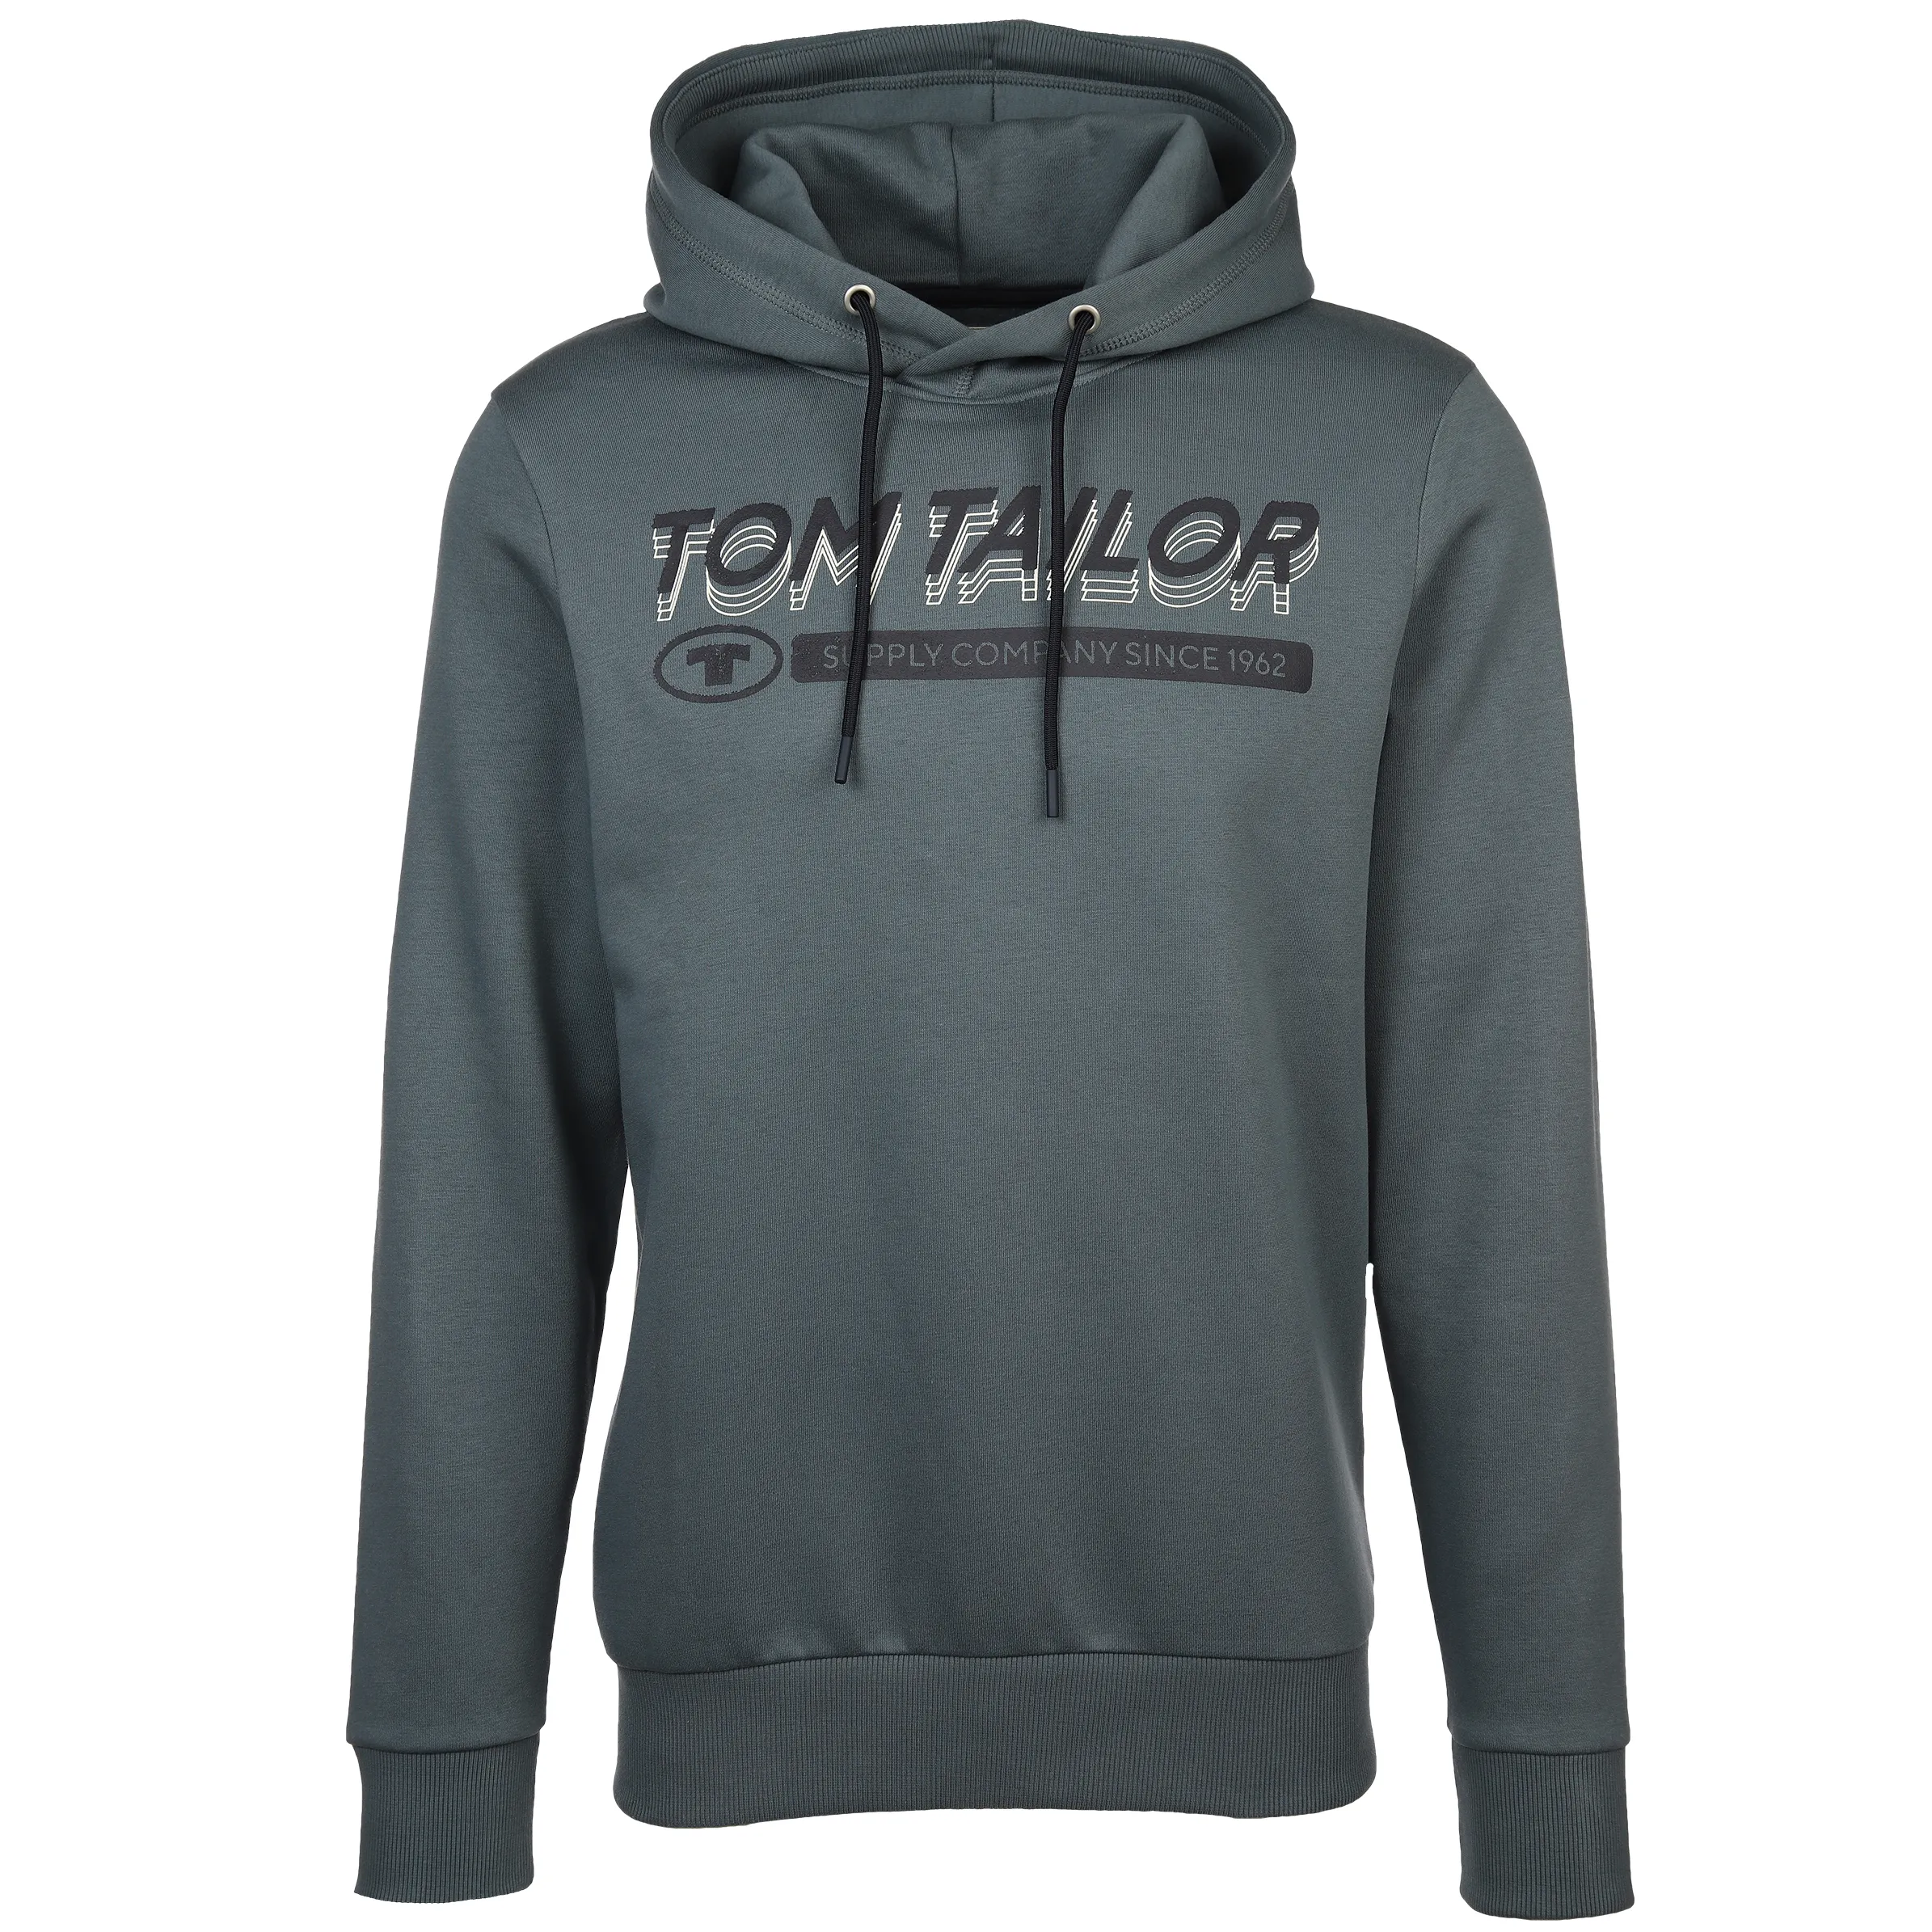 Tom Tailor 1039649 logo hood Grün 887466 32506 1